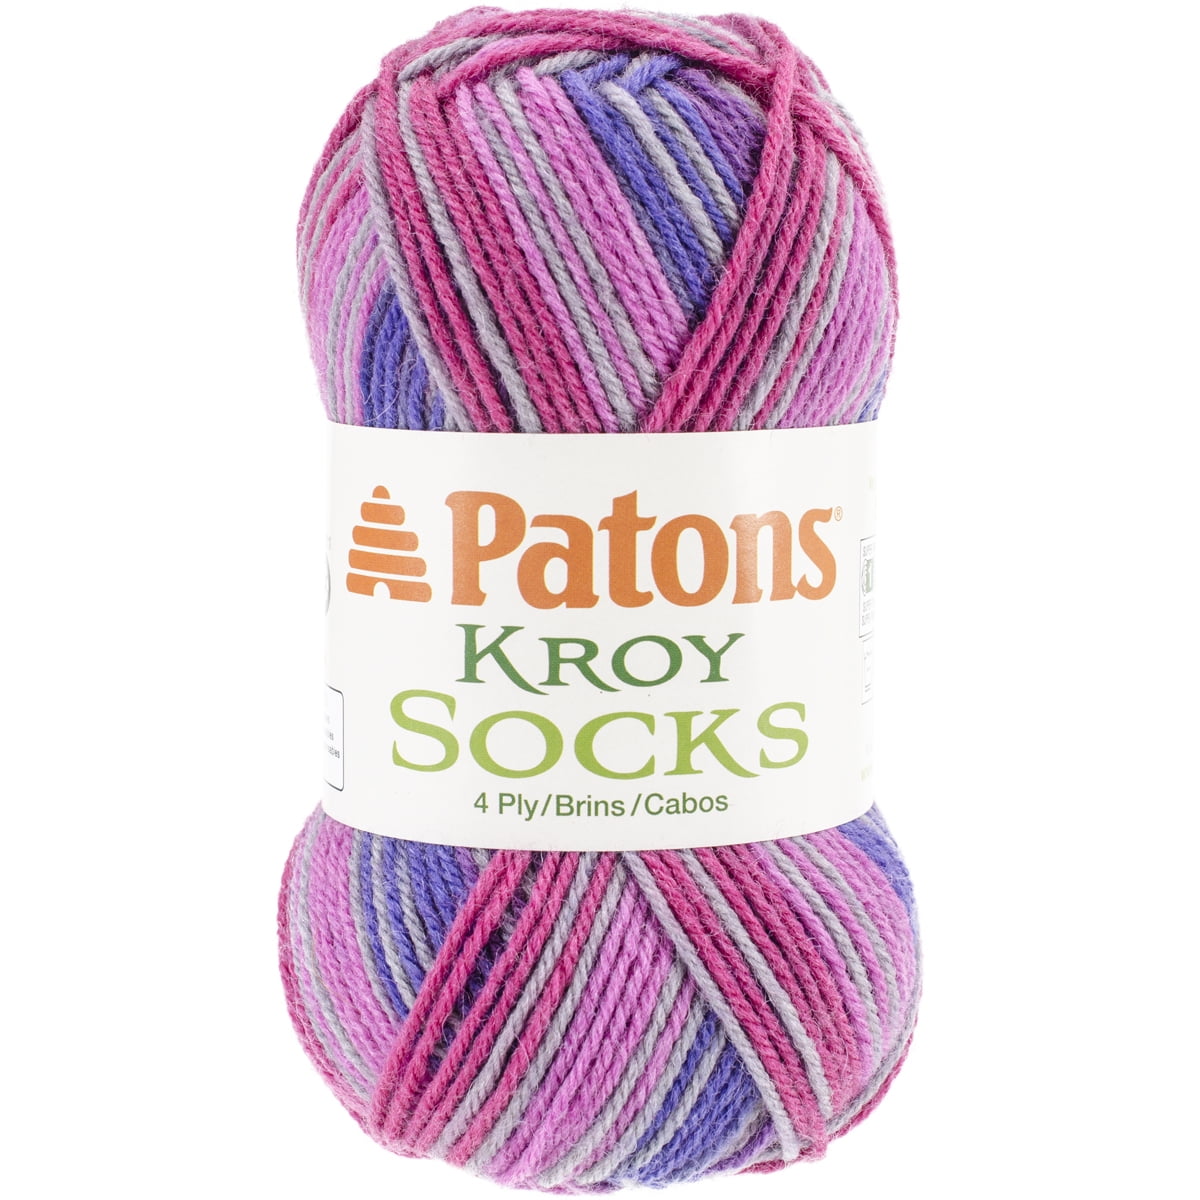 sock yarn cotton yarn wool cotton sock yarn grape sock yarn Grape Cotton sock yarn hand dyed sock yarn purple sock yarn